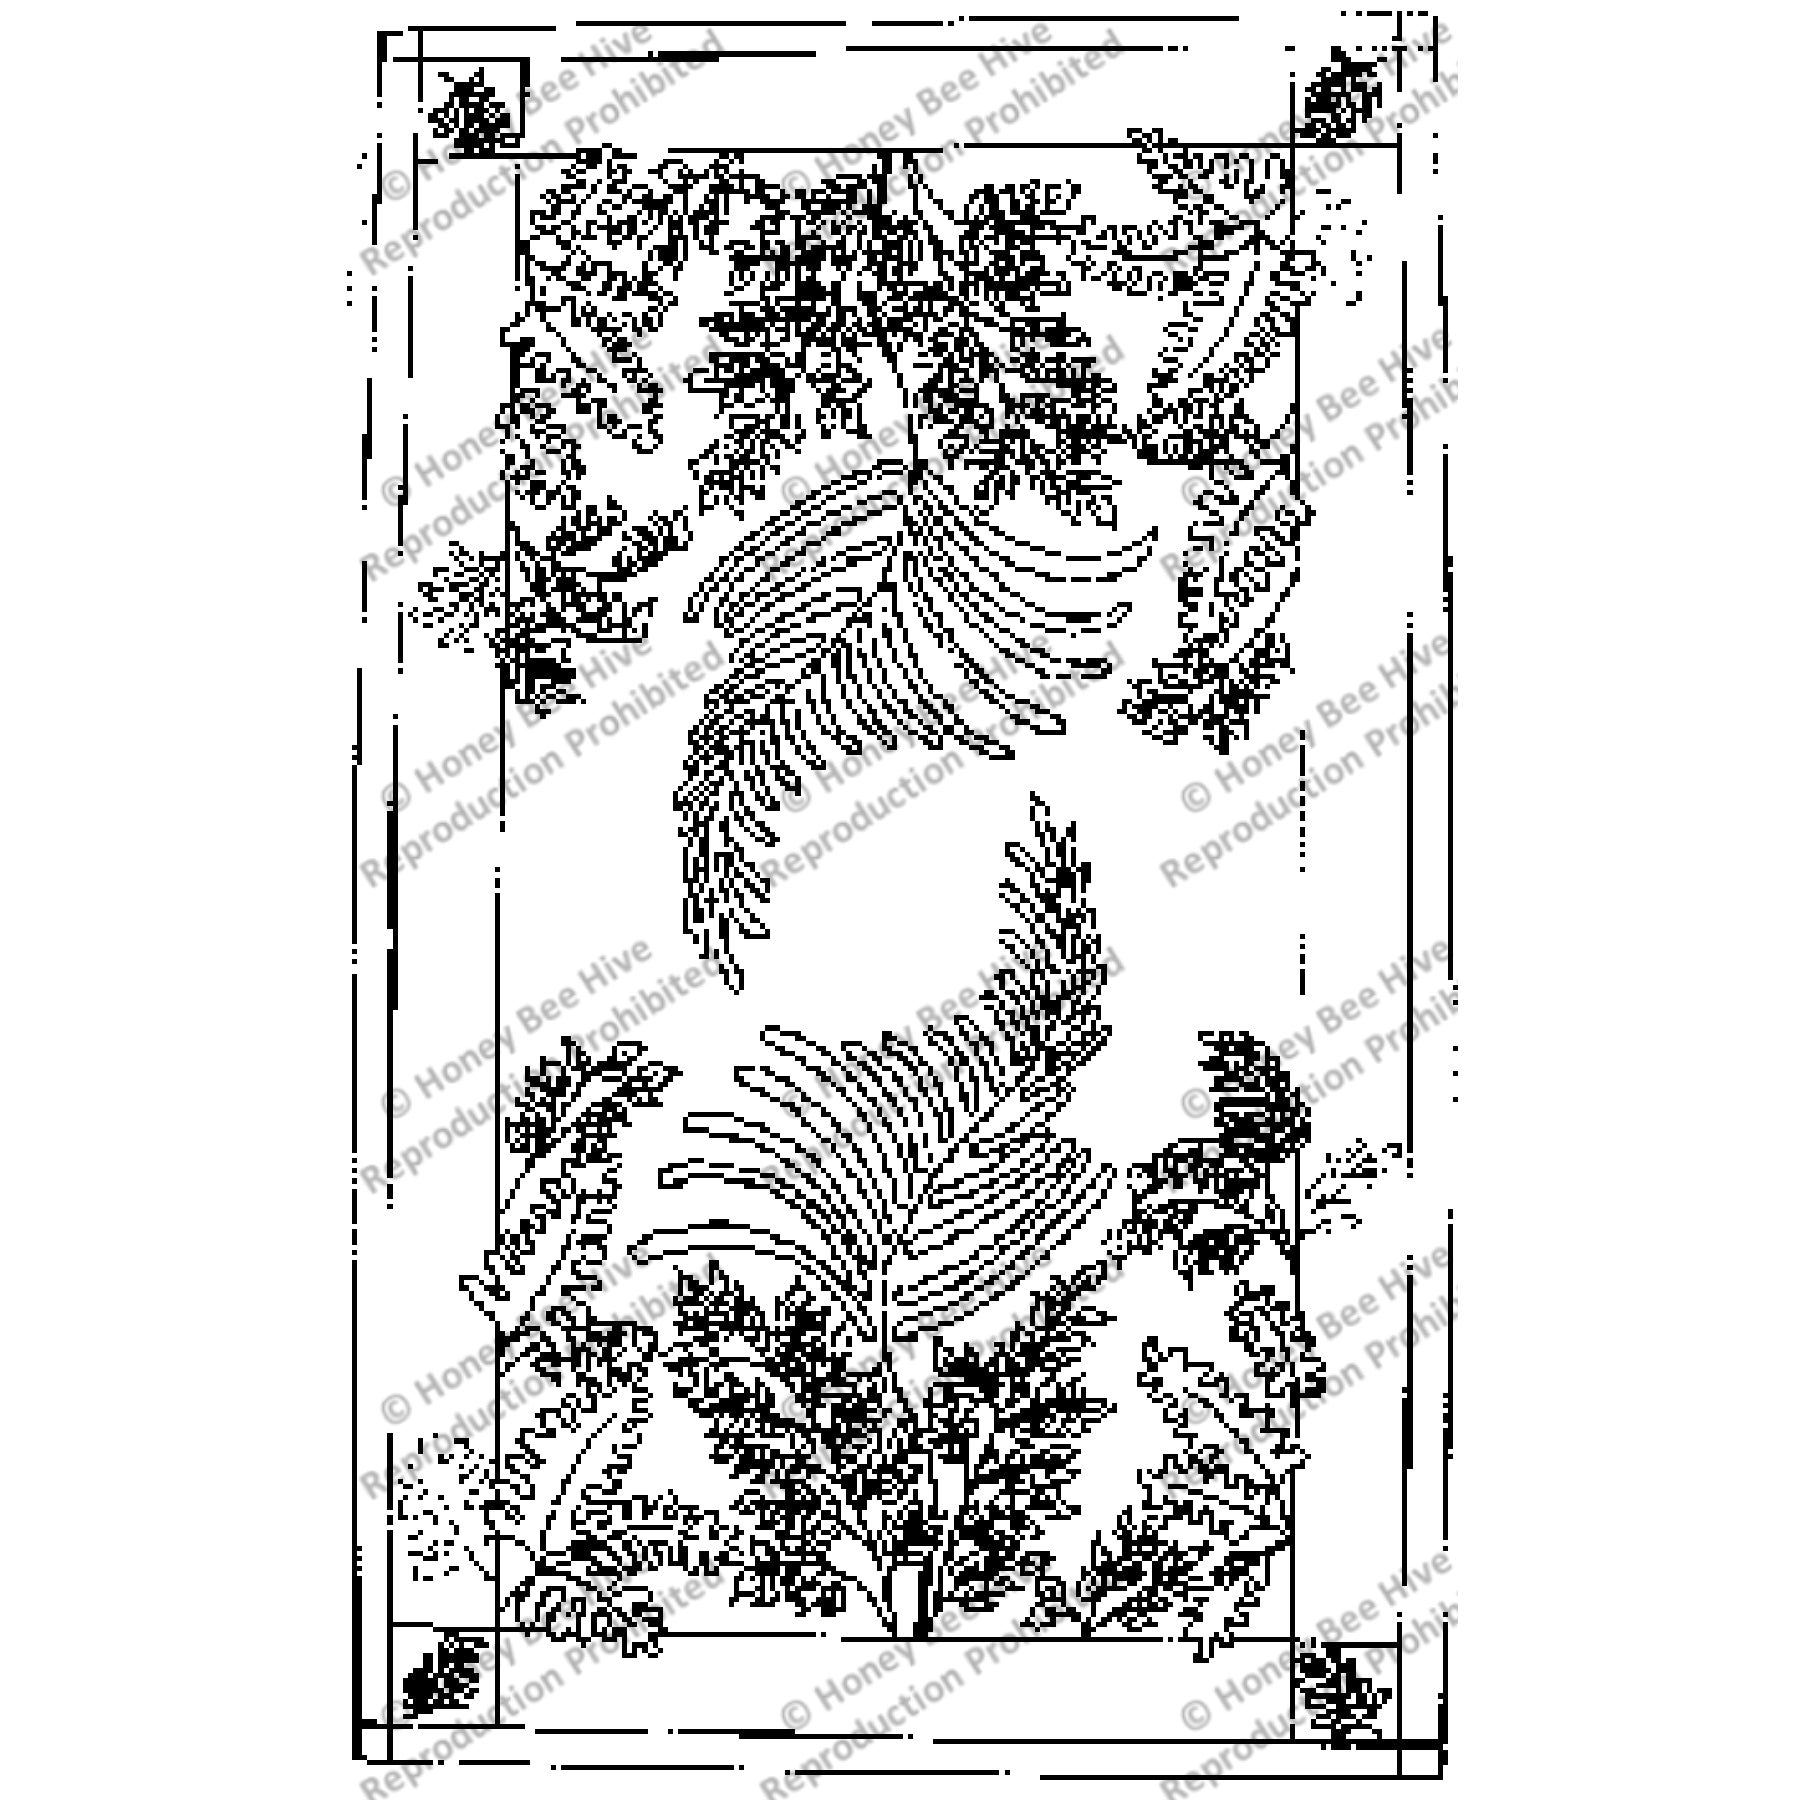 Kissing Ferns, rug hooking pattern